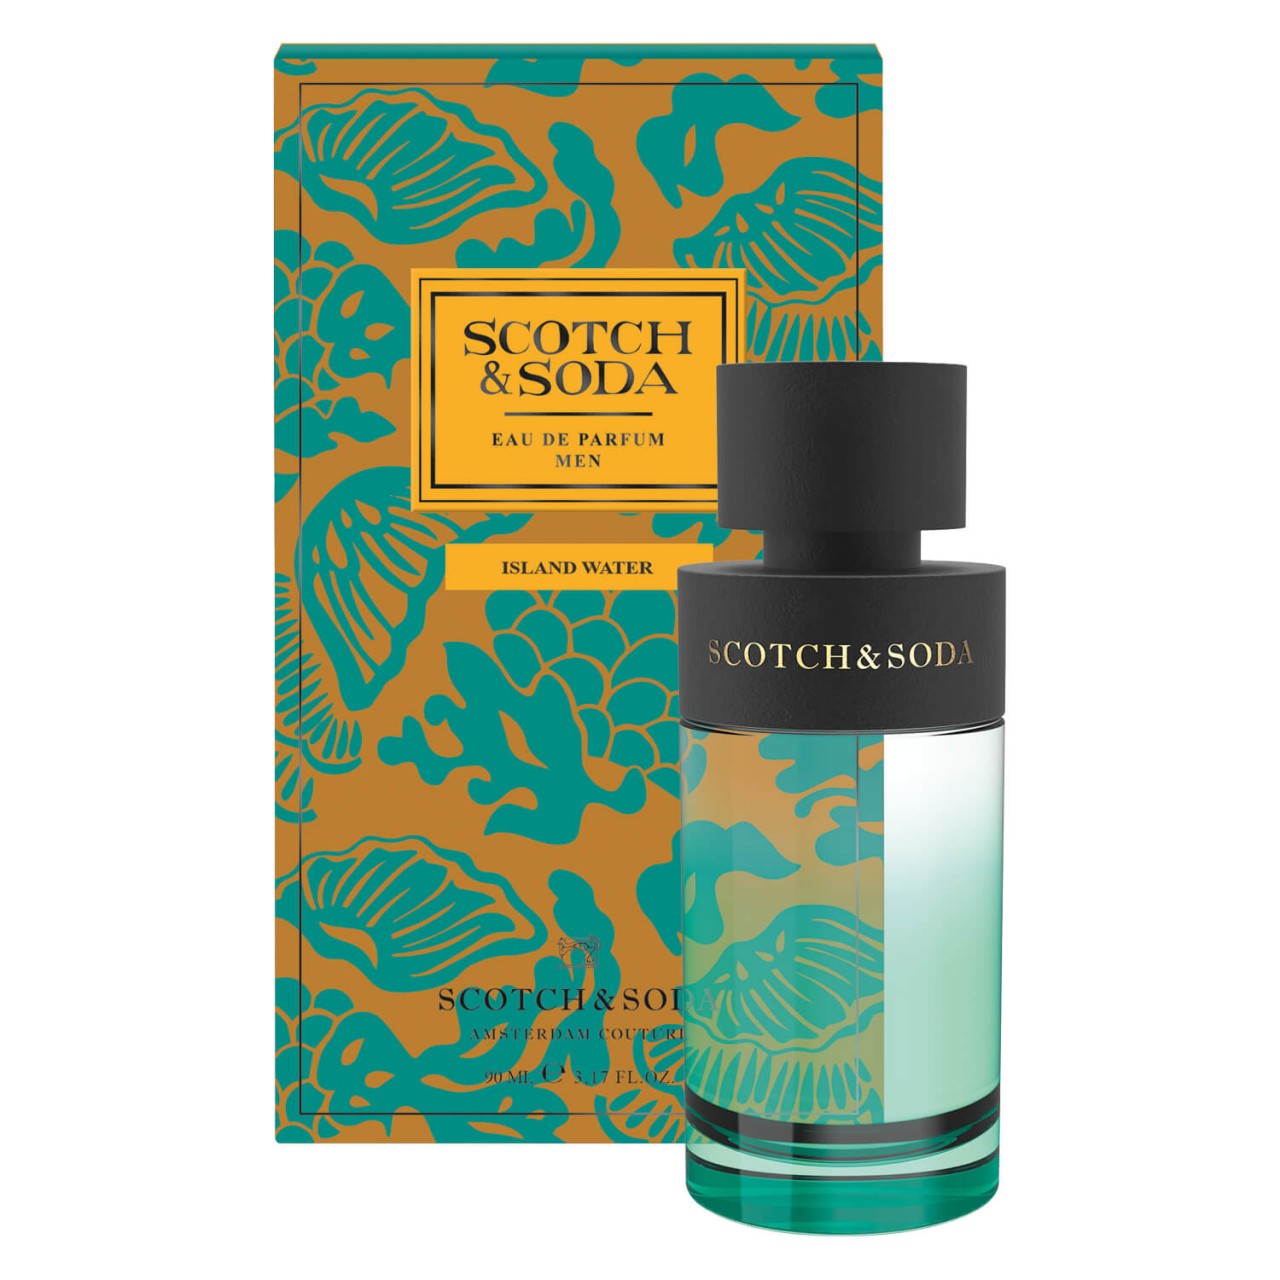 SCOTCH & SODA - Island Water Men Eau de Parfum von SCOTCH & SODA